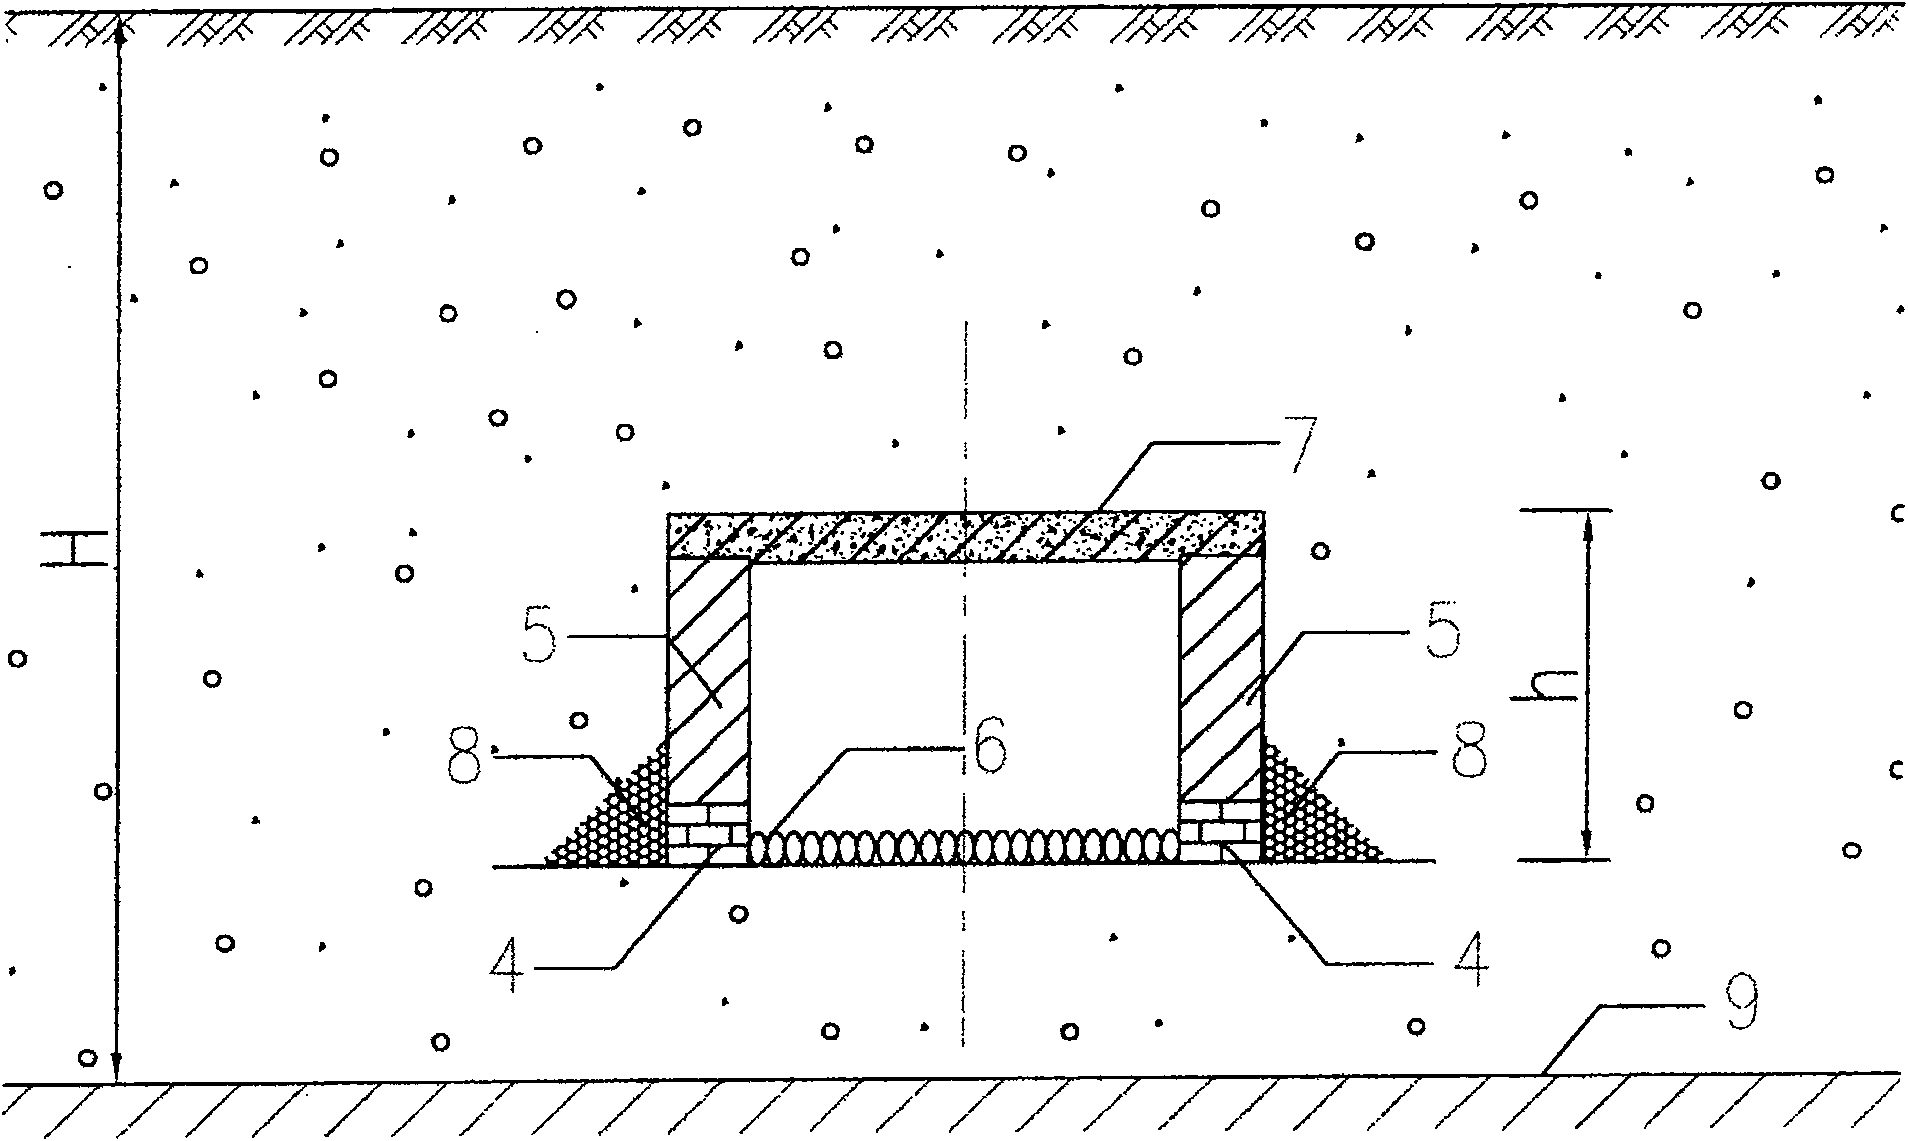 Design construction method of rectangular infiltration gallery for stabling water volume